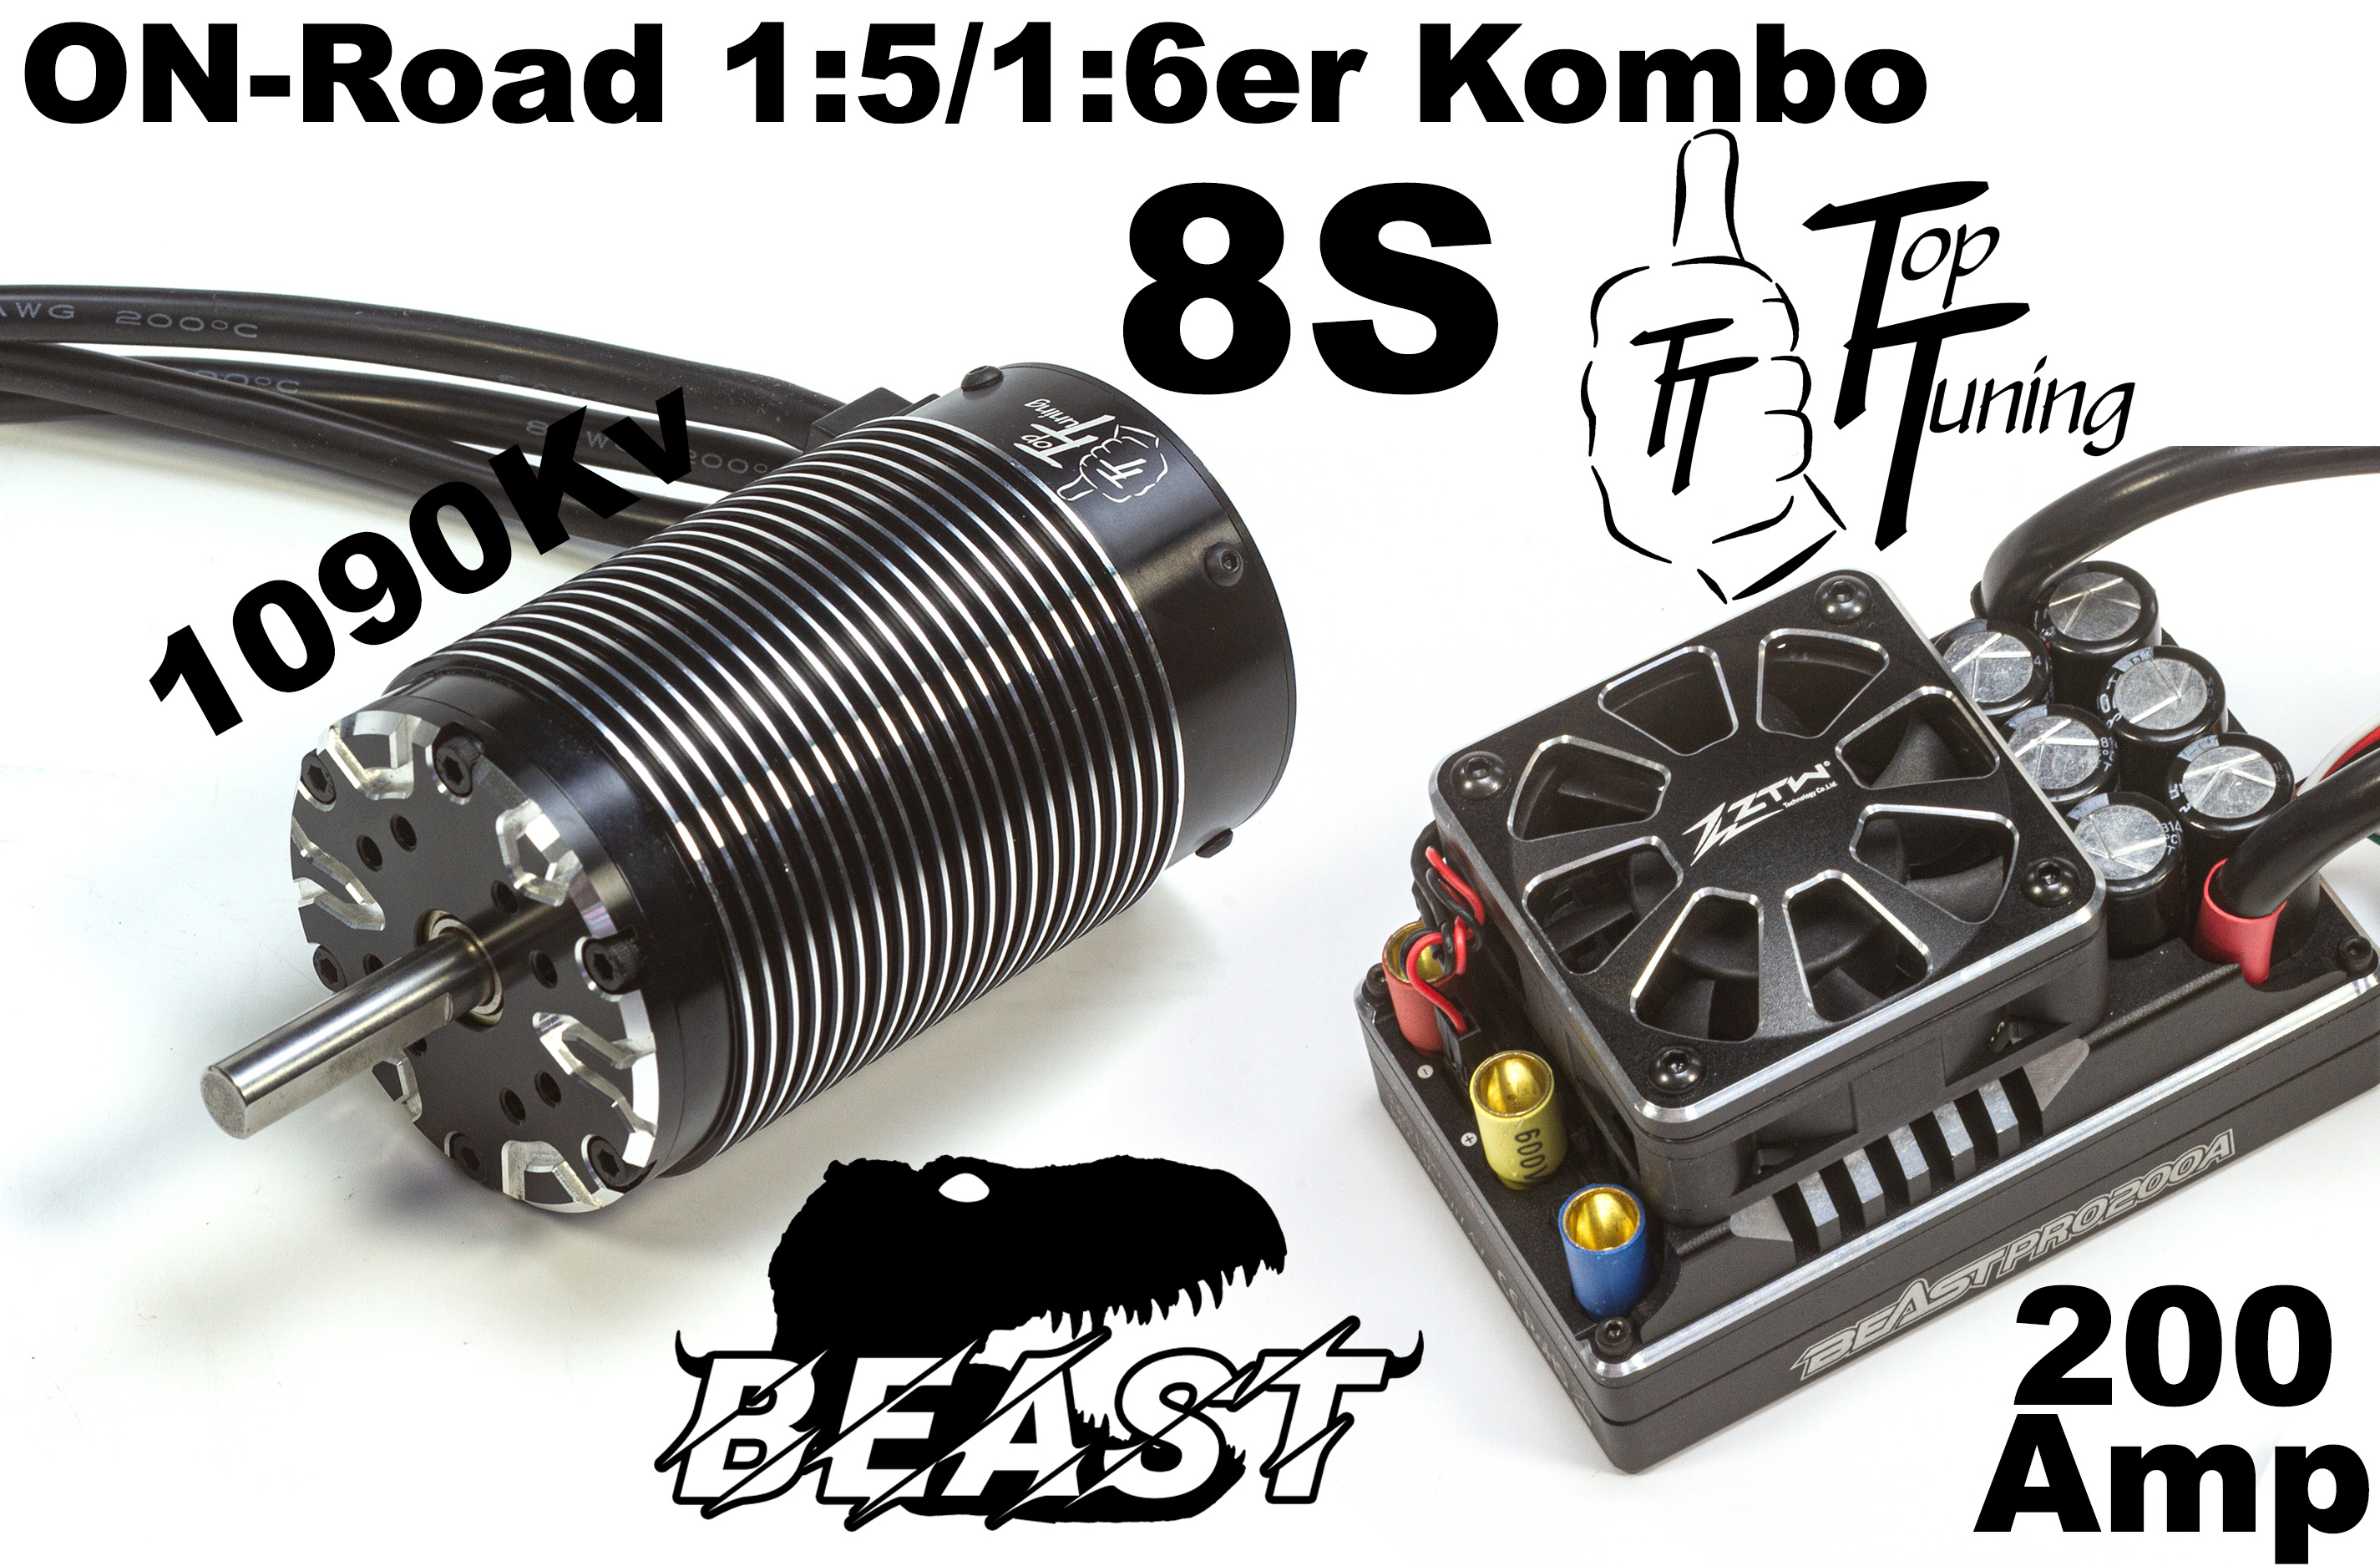 y1532/03 ZTW Beast Pro 200A ESC and 1090KV Brushless Motor